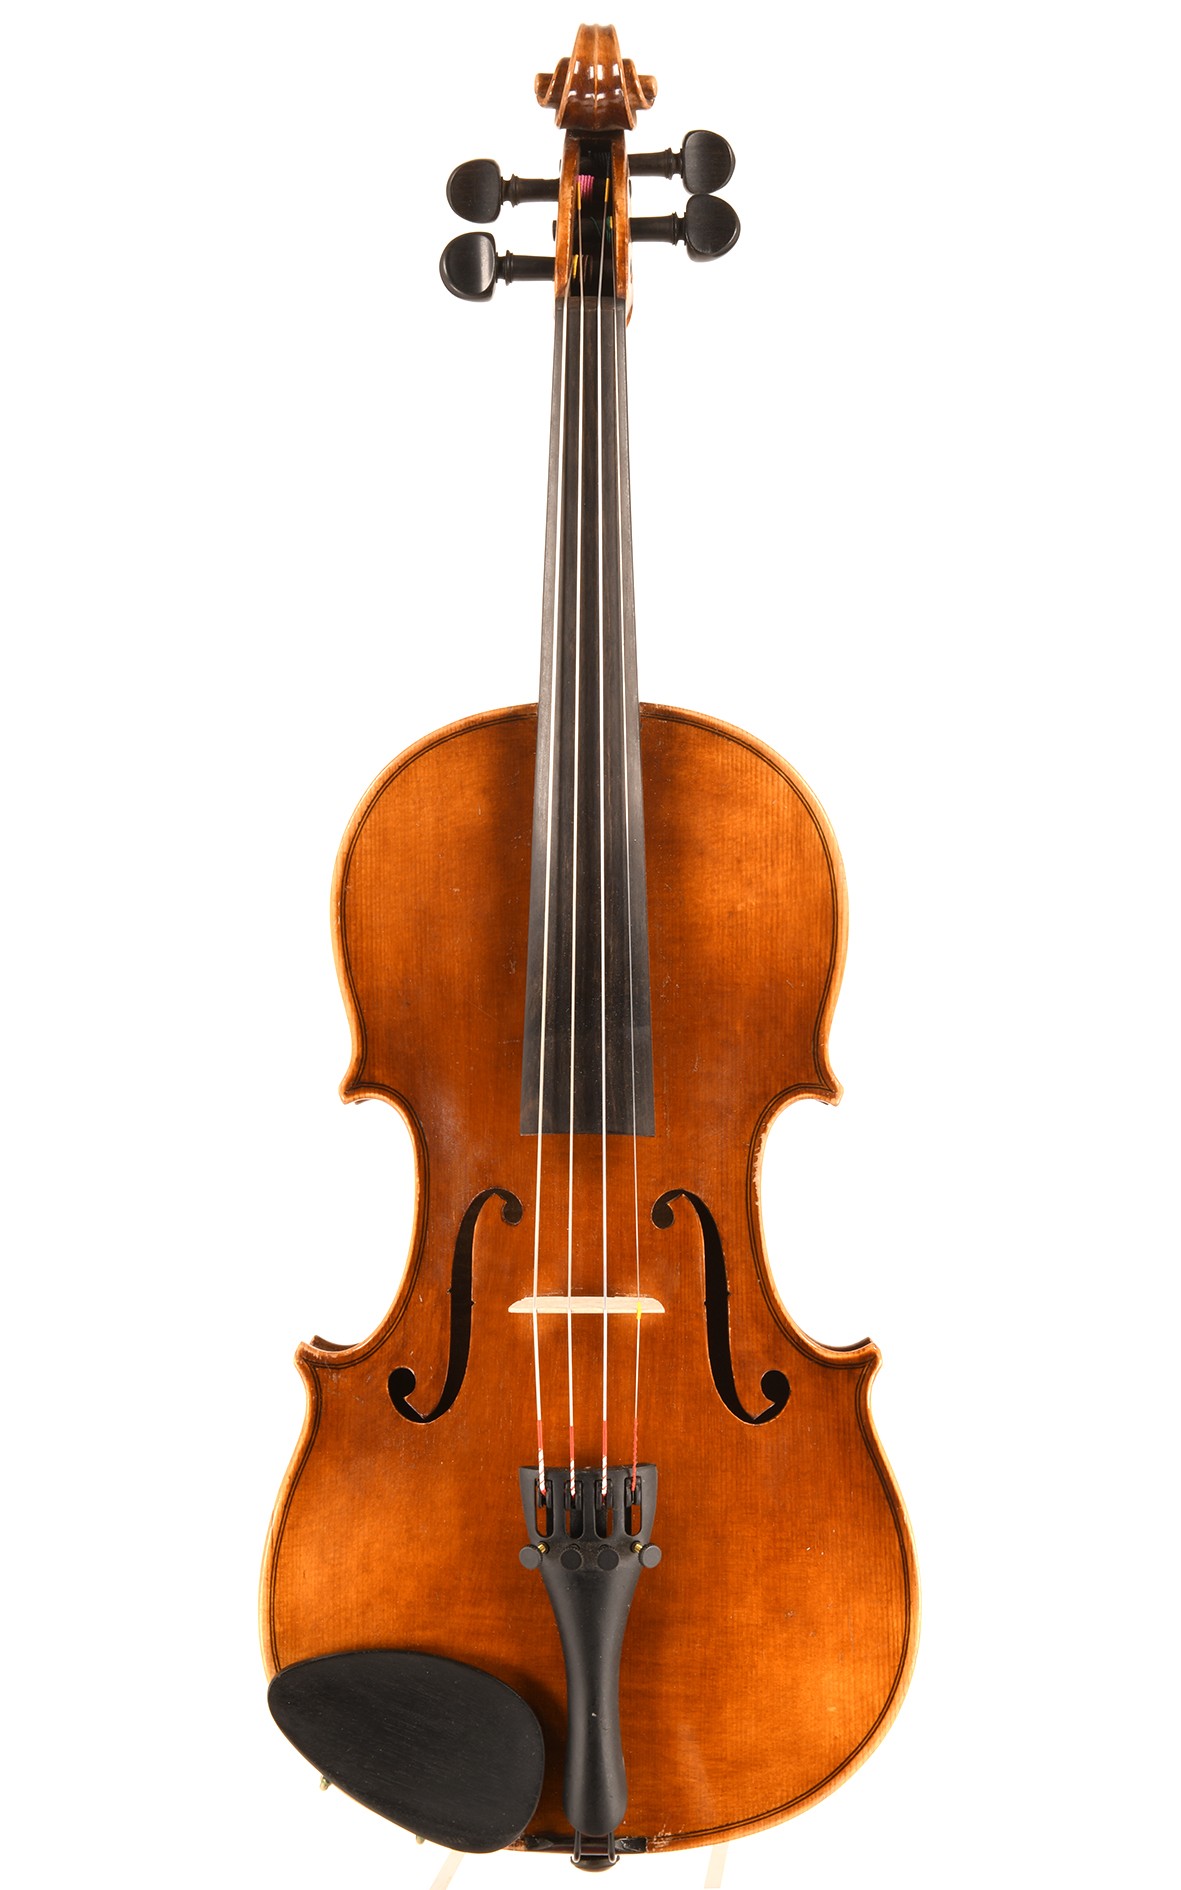 3/4 violin from Saxony, 1950s